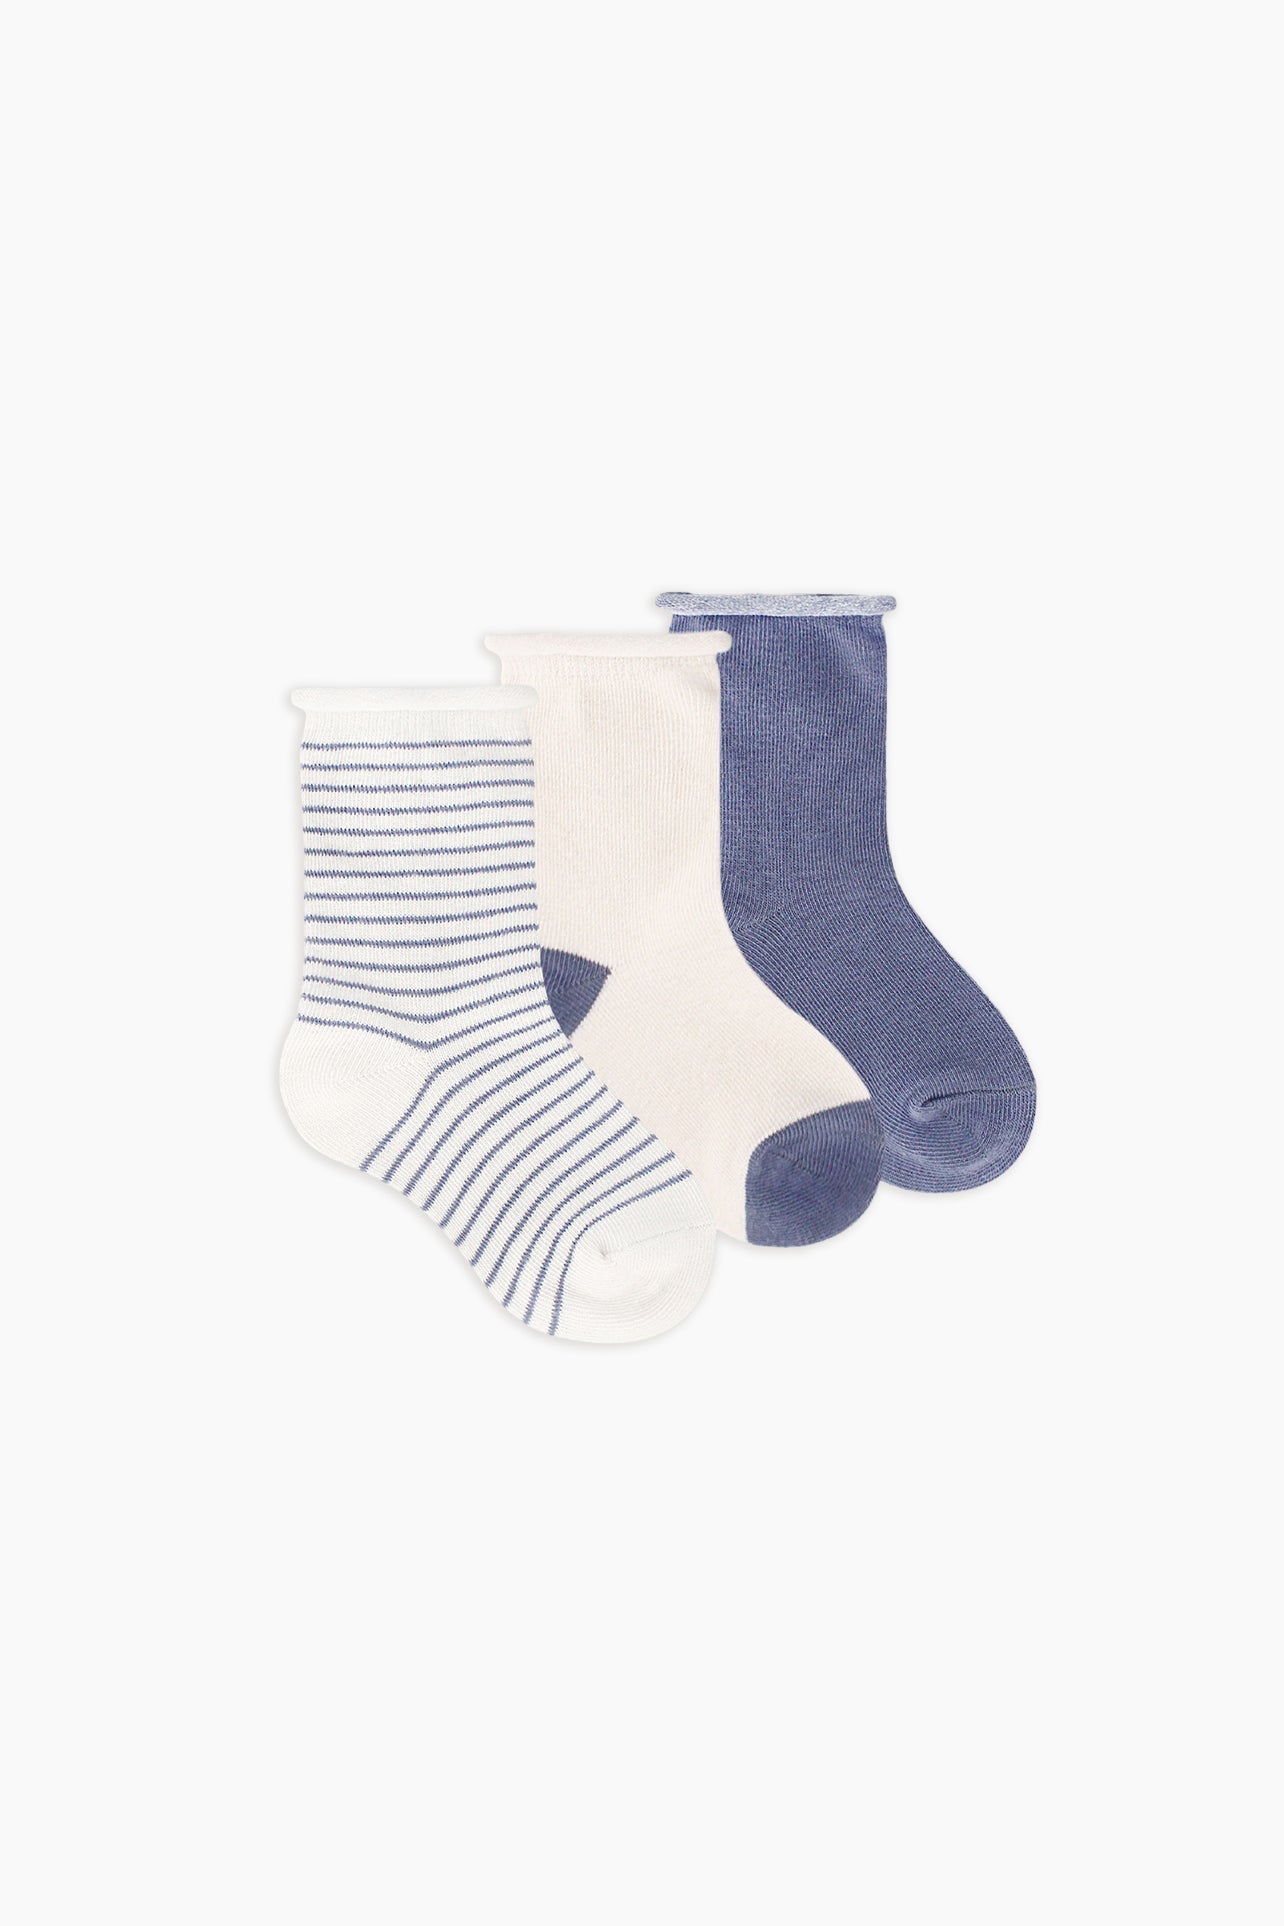 Snugabye Organic Cotton Toddler Crew Socks 3-Pack - Folkstone Grey